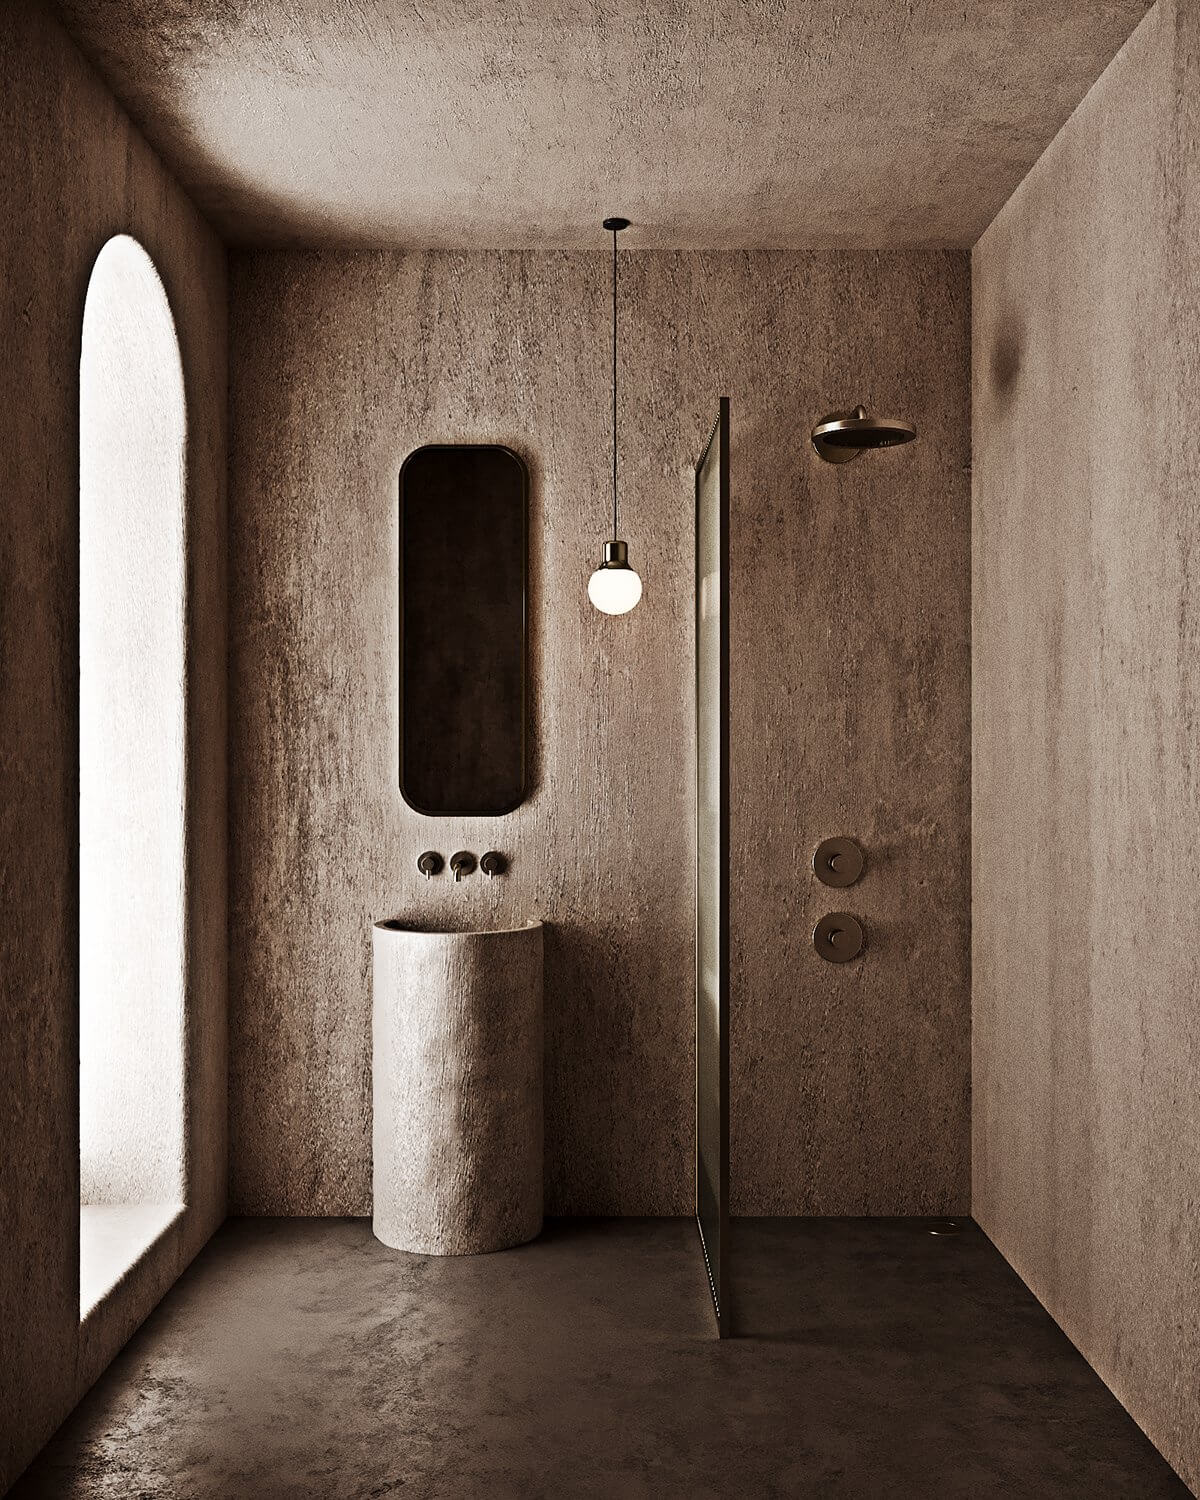 Monochrome bathroom design plastered walls - cgi visualization